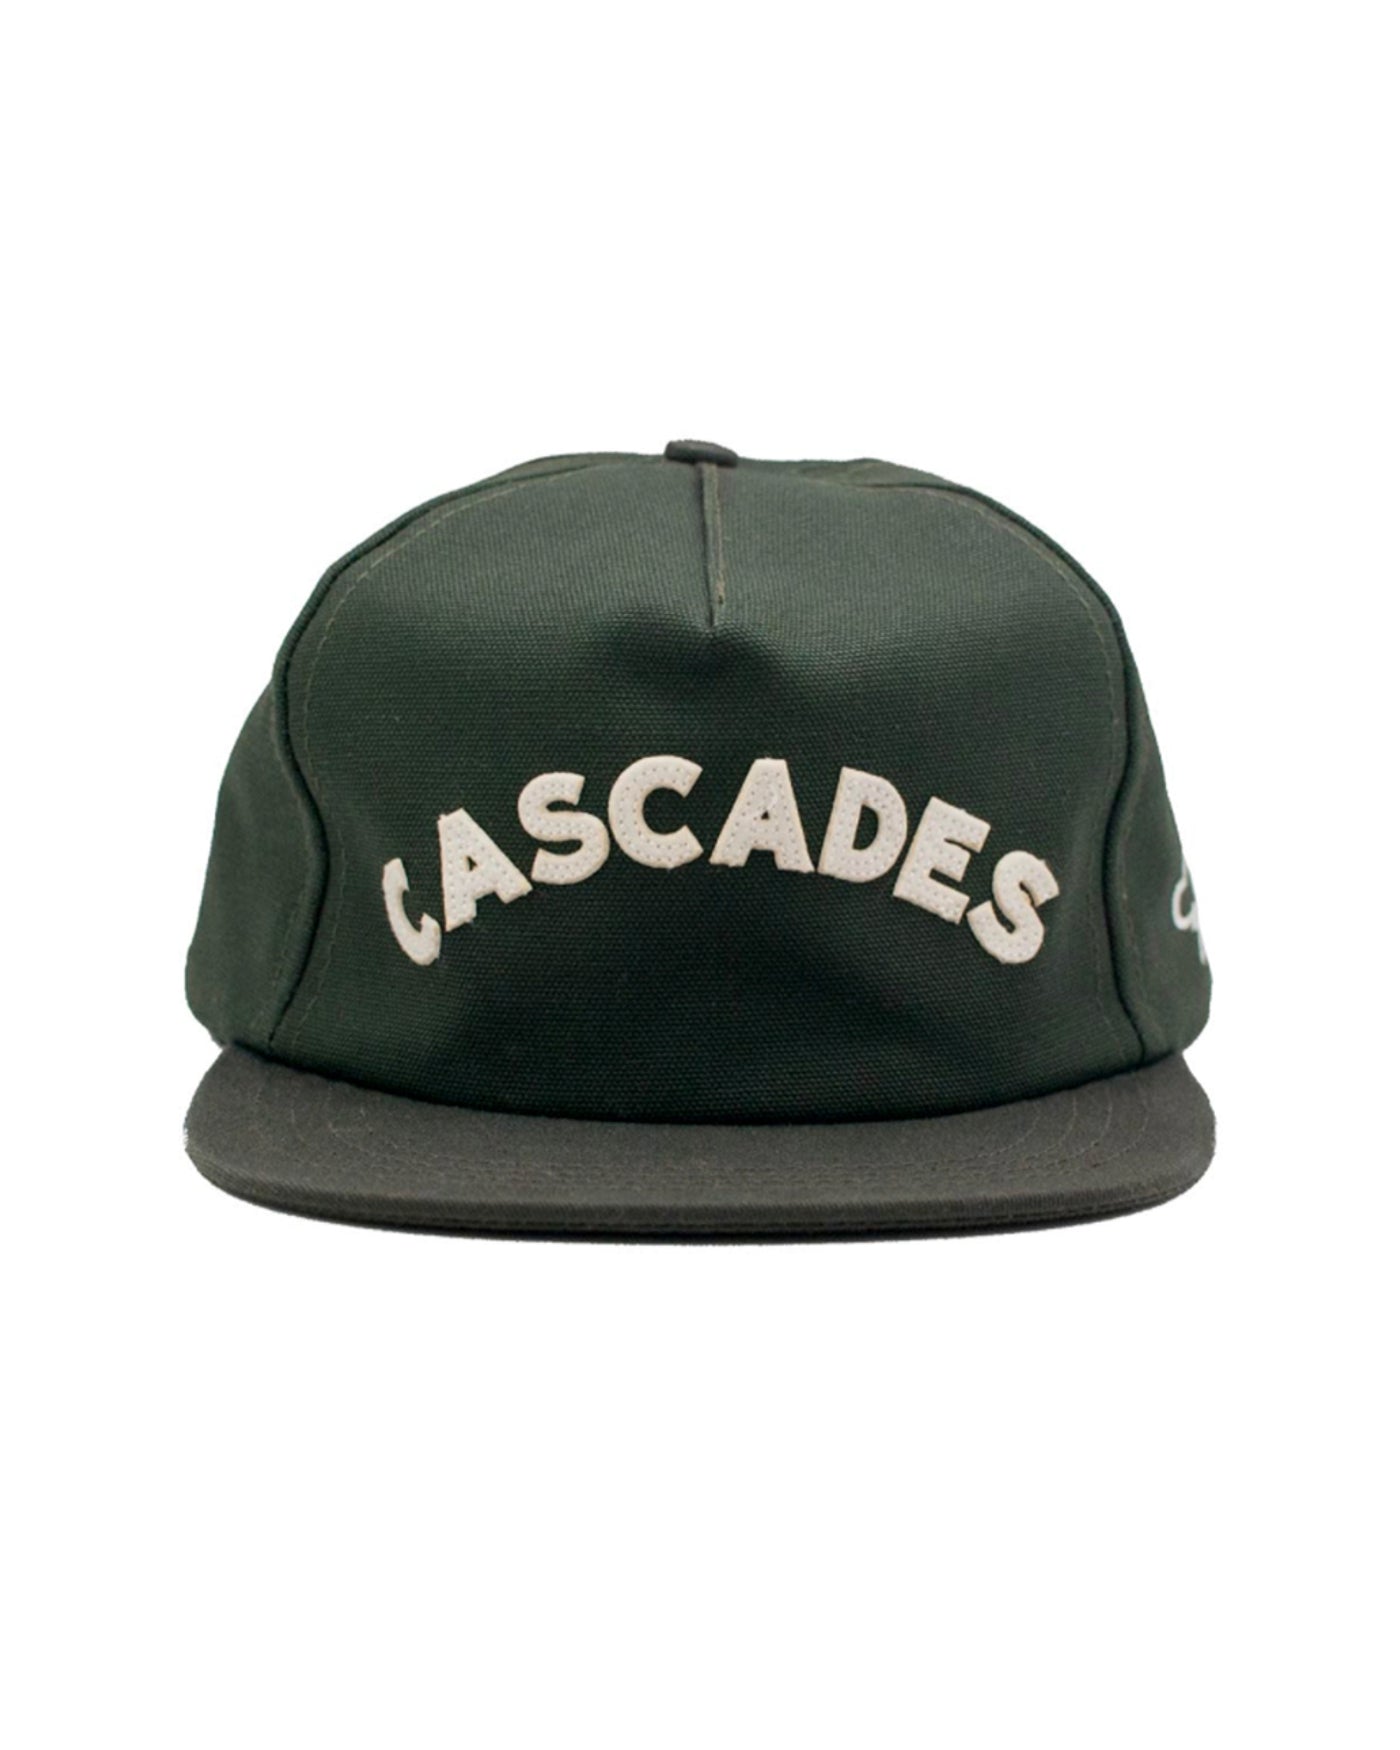 T.A.C Cascades II Strapback